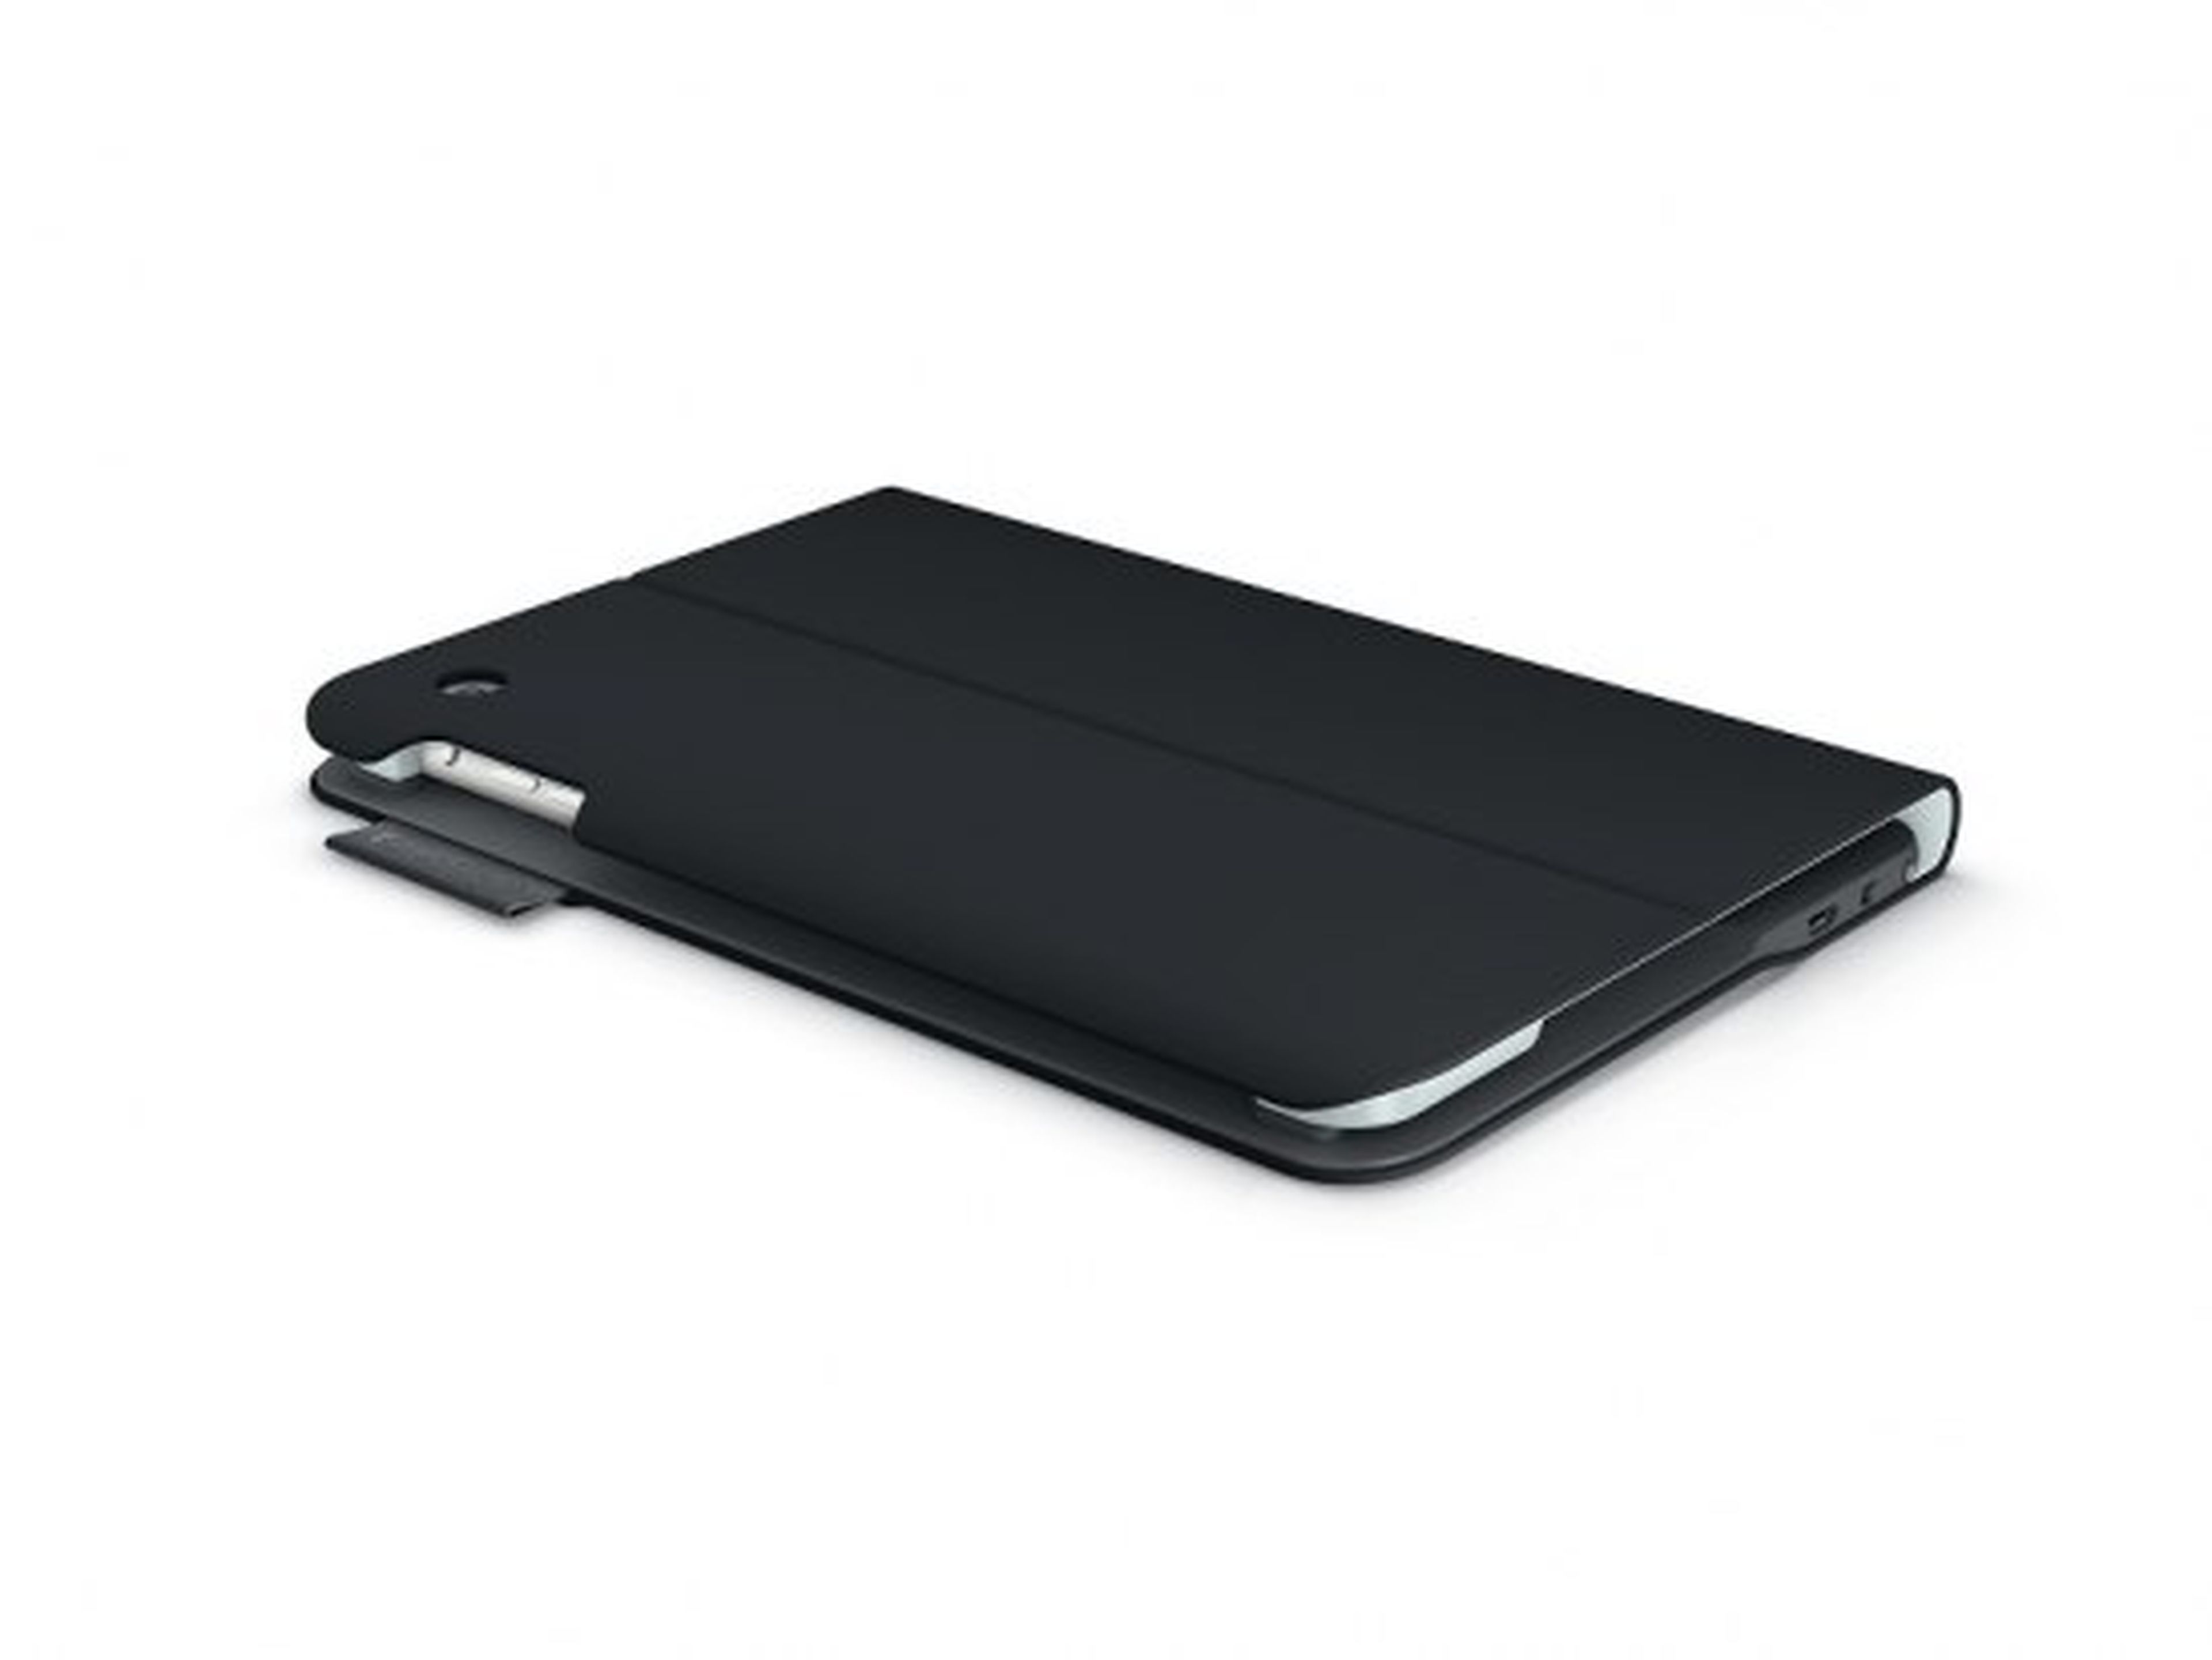 Ultrathin Keyboard Folio, la nueva funda para el iPad mini